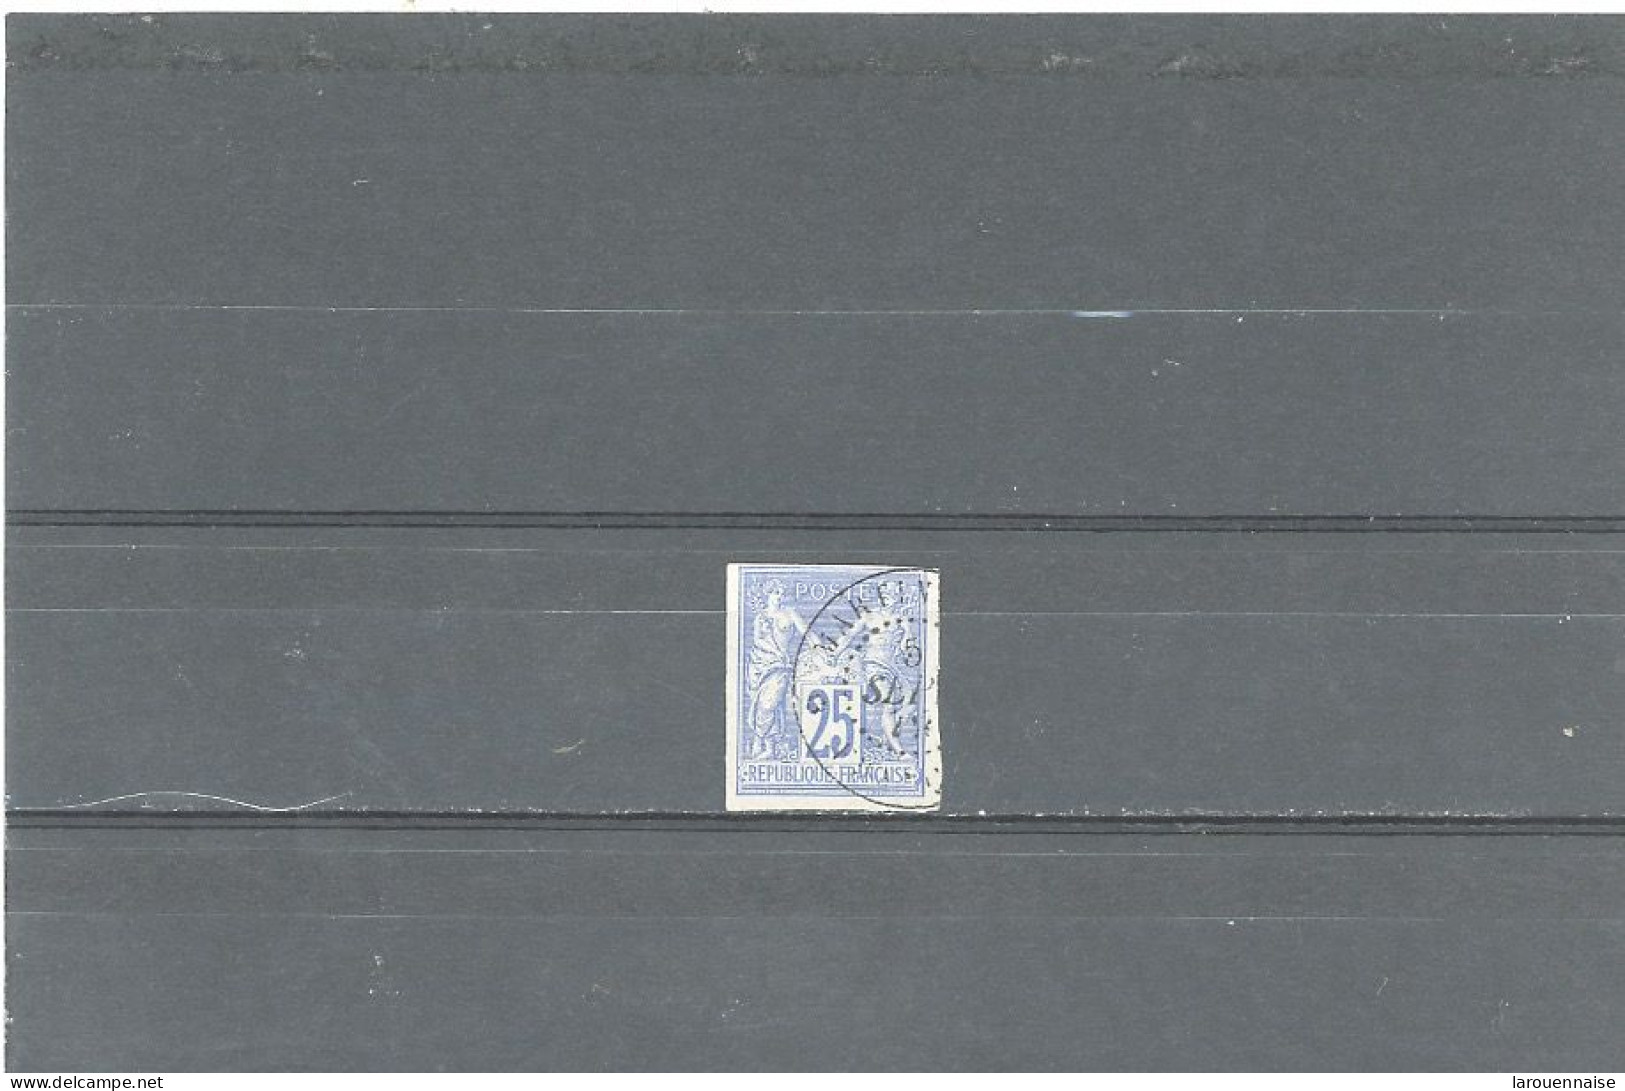 MARTINIQUE-COLONIES GÉNÉRALES-N°36 TYPE SAGE 25c OUTREMER TTB -Obl CàD. Léger MARTIN(IQUE)/*BASSE (POINTE)*5 SEP 78 - Used Stamps